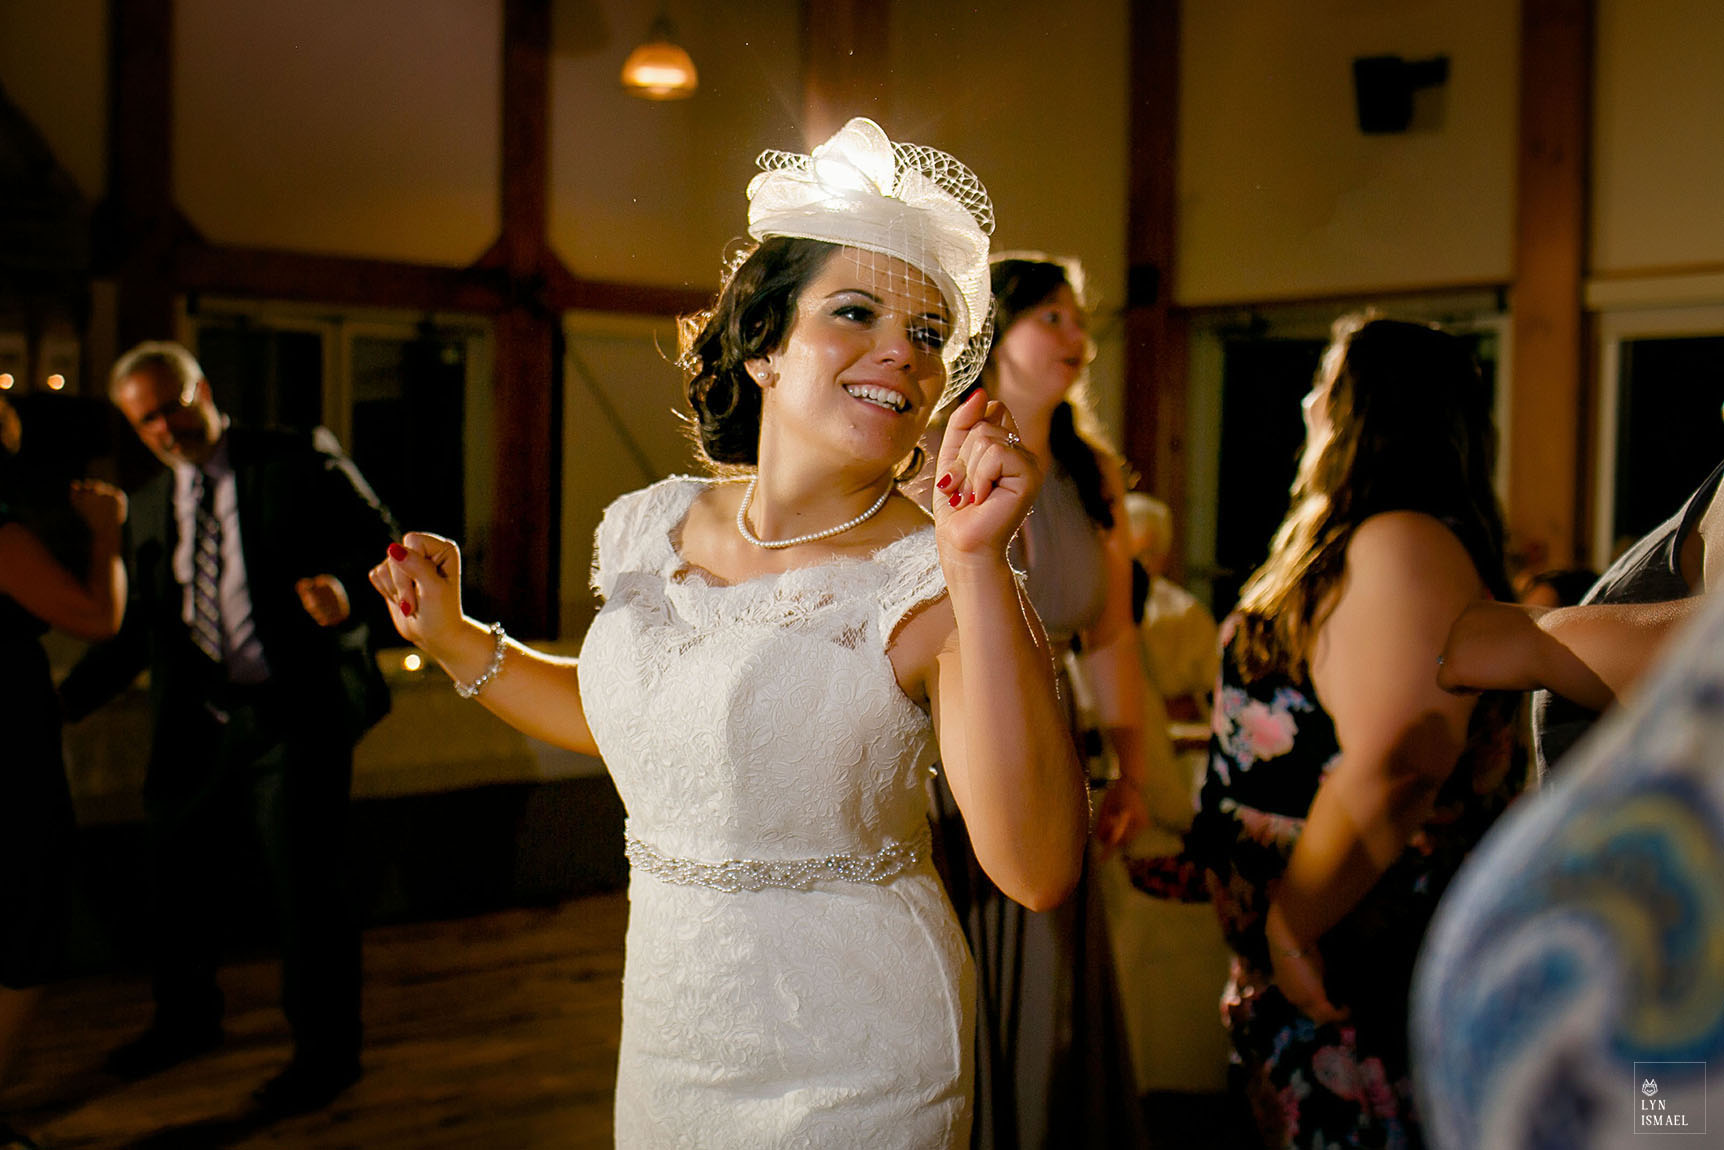 Bride dances with her guests at her wedding reception in Grey Silo in Waterloo, Ontario.